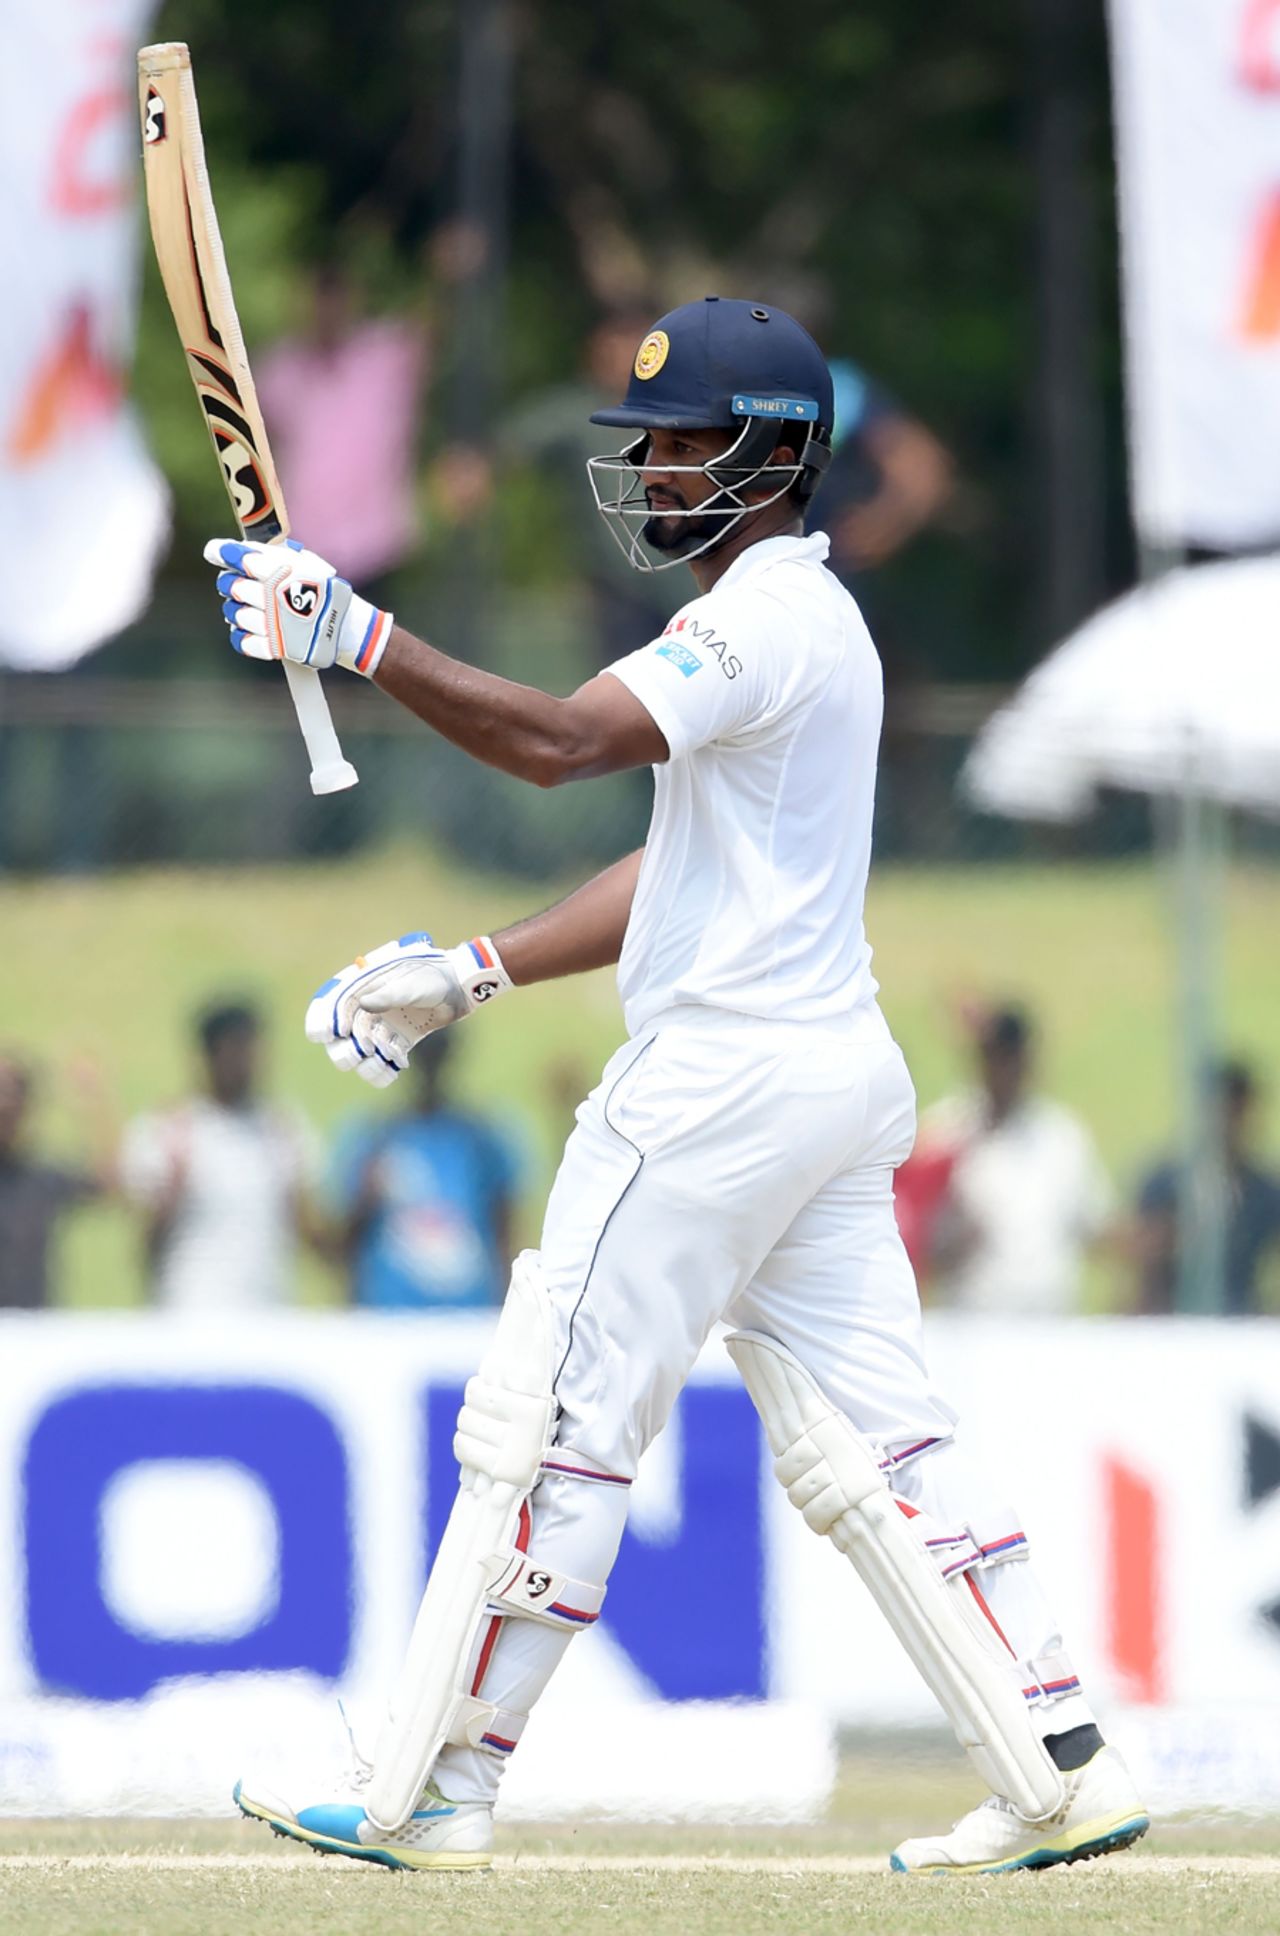 Dimuth Karunaratne raises his bat after scoring his fifth Test century, Sri Lanka v Bangladesh, 2nd Test, Colombo, 4th day, March 18, 2017